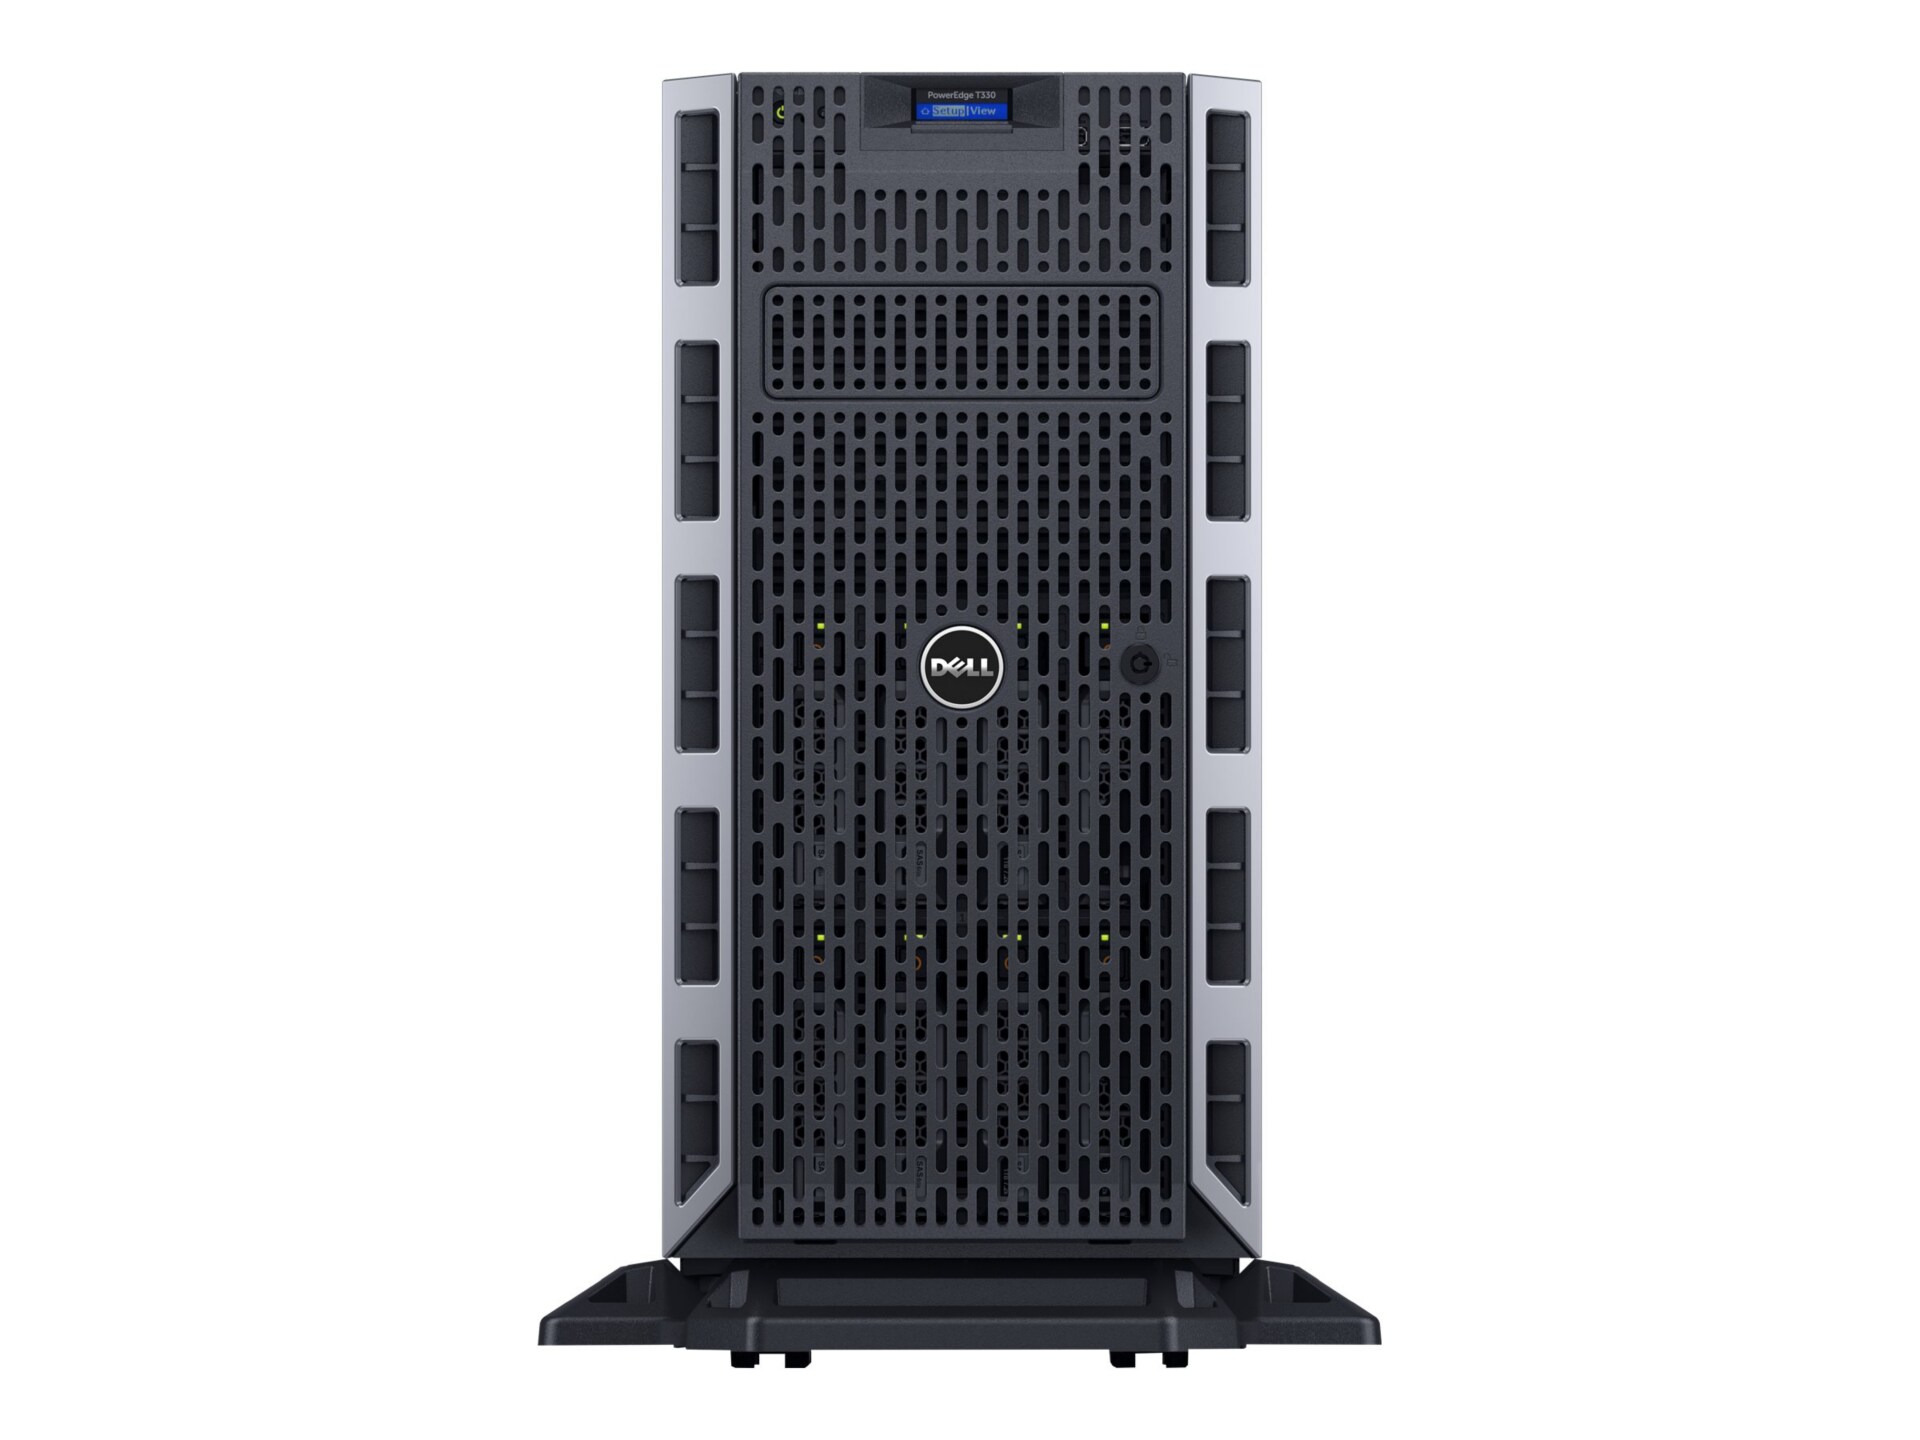 Dell PowerEdge T330 - tower - Xeon E3-1220V6 3 GHz - 8 GB - 1 TB